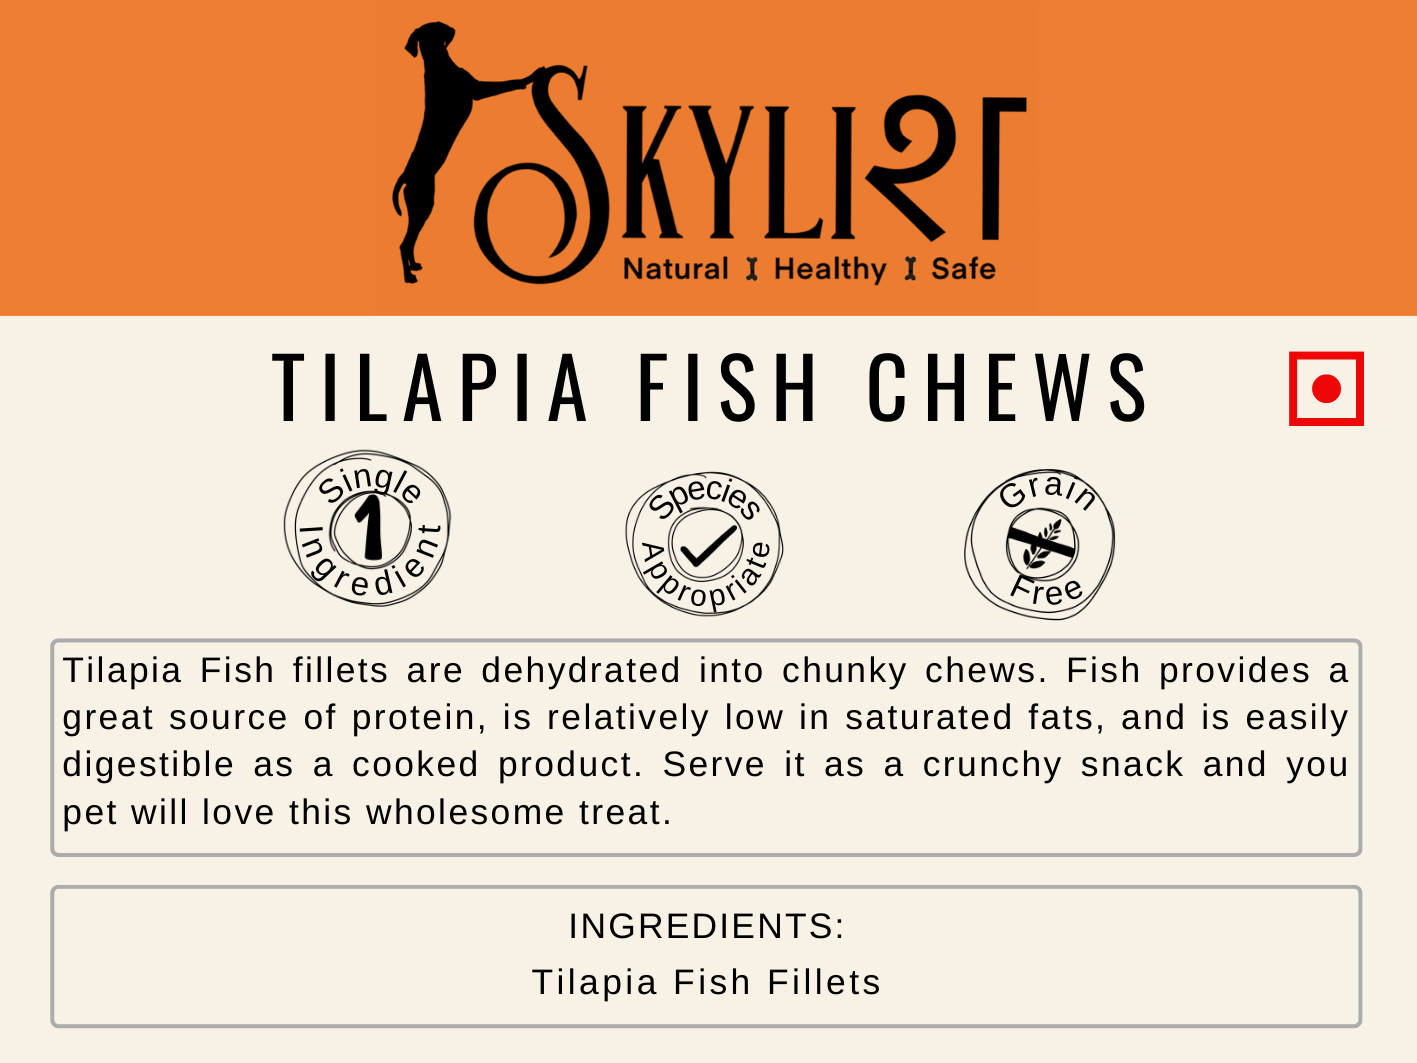 Tilapia Fish Chews, Single Ingredient, Single Protein, Species Appropriate, Gluten Free, No Preservatives